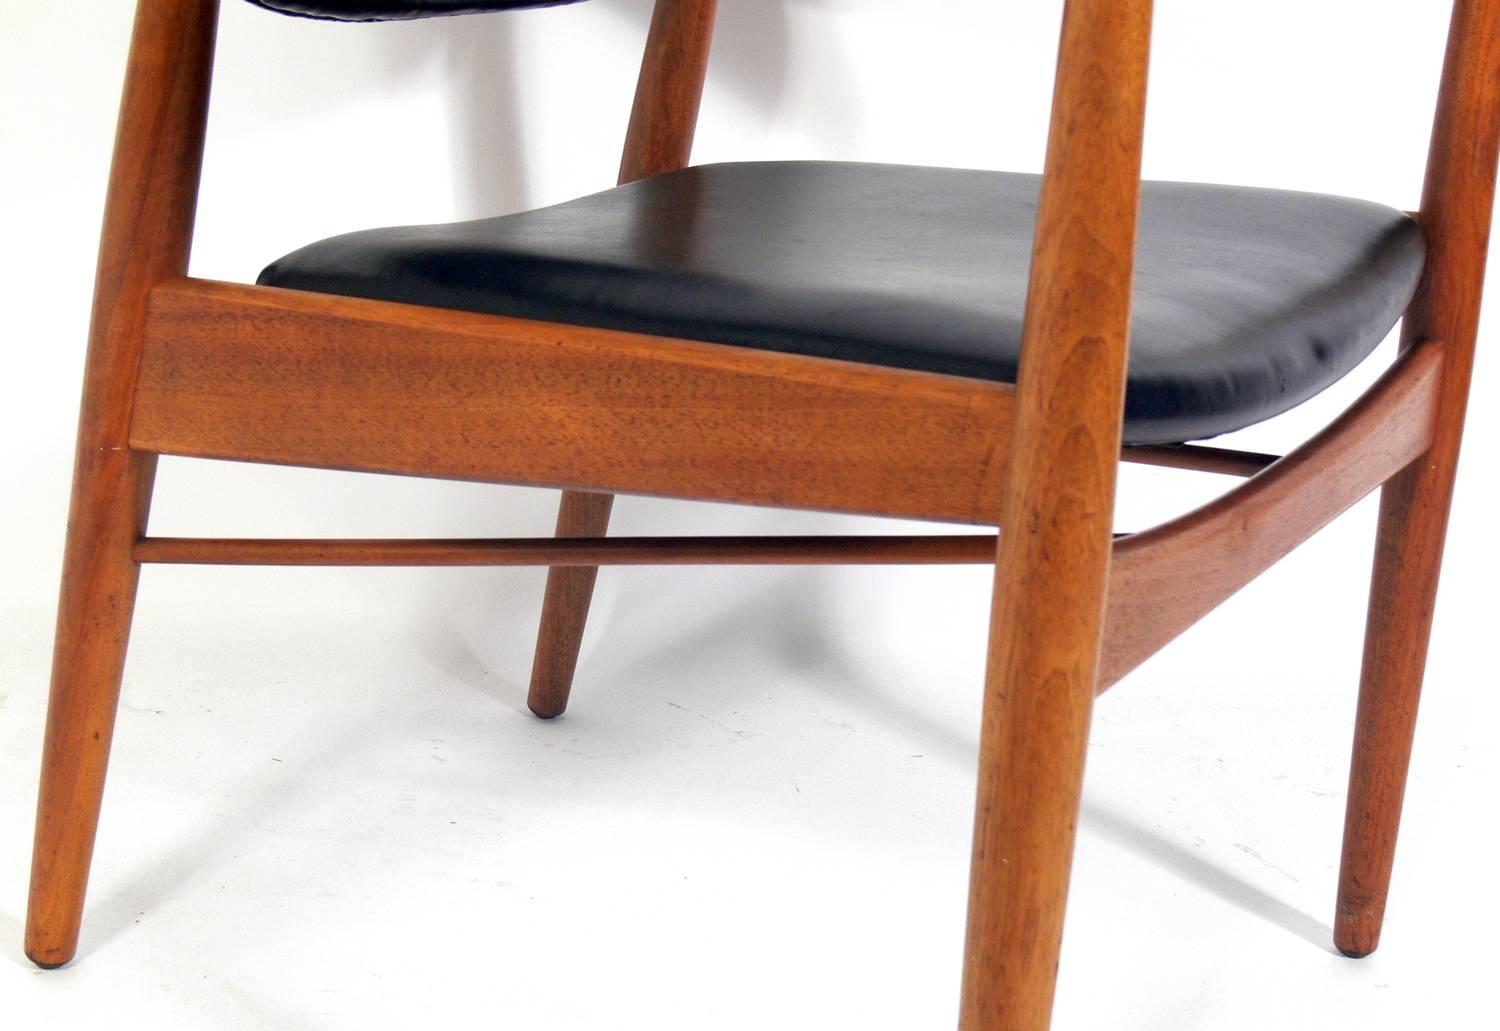 Sculptural Danish Modern Lounge Chair by Arne Vodder 1